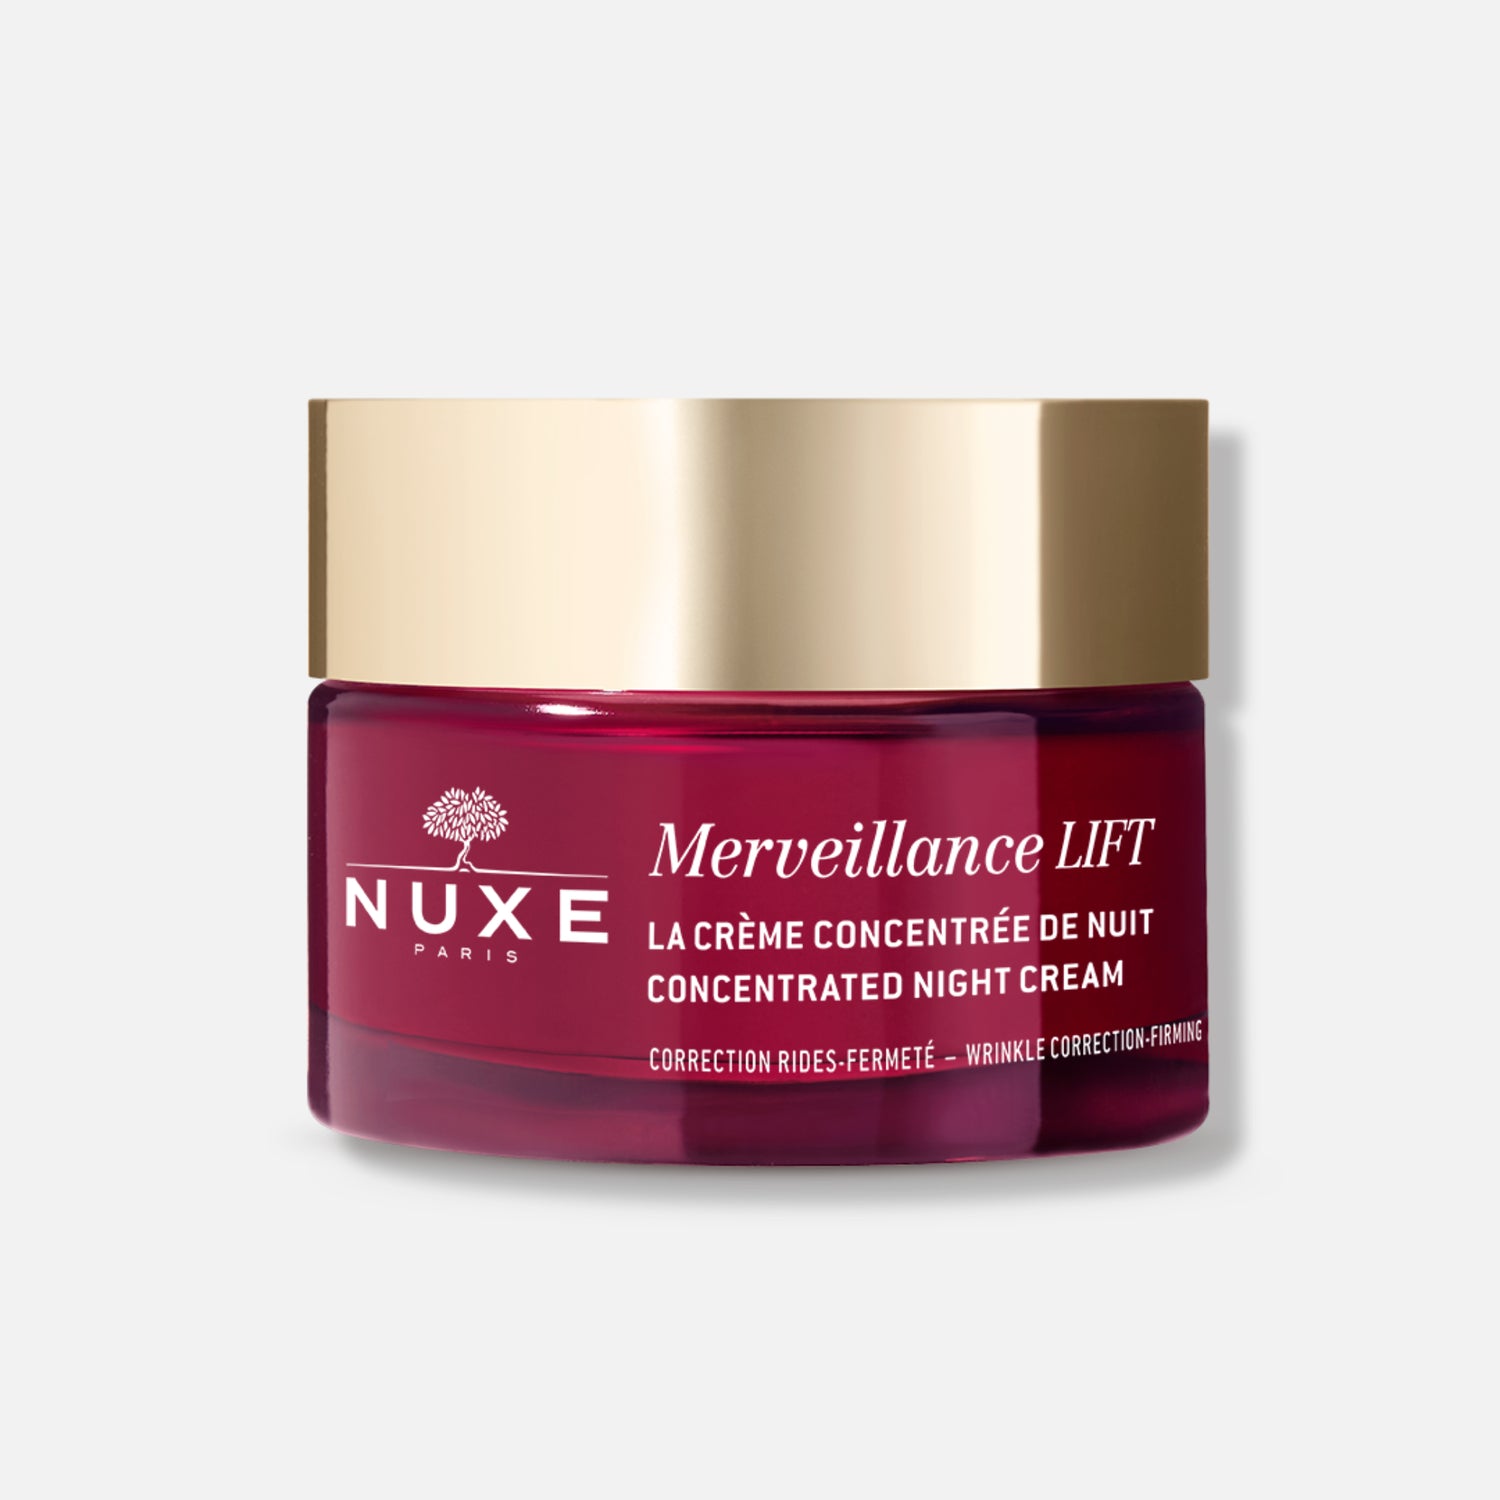 Nuxe - Merveillance Lift - Crema de noche 50 ml - ebeauty